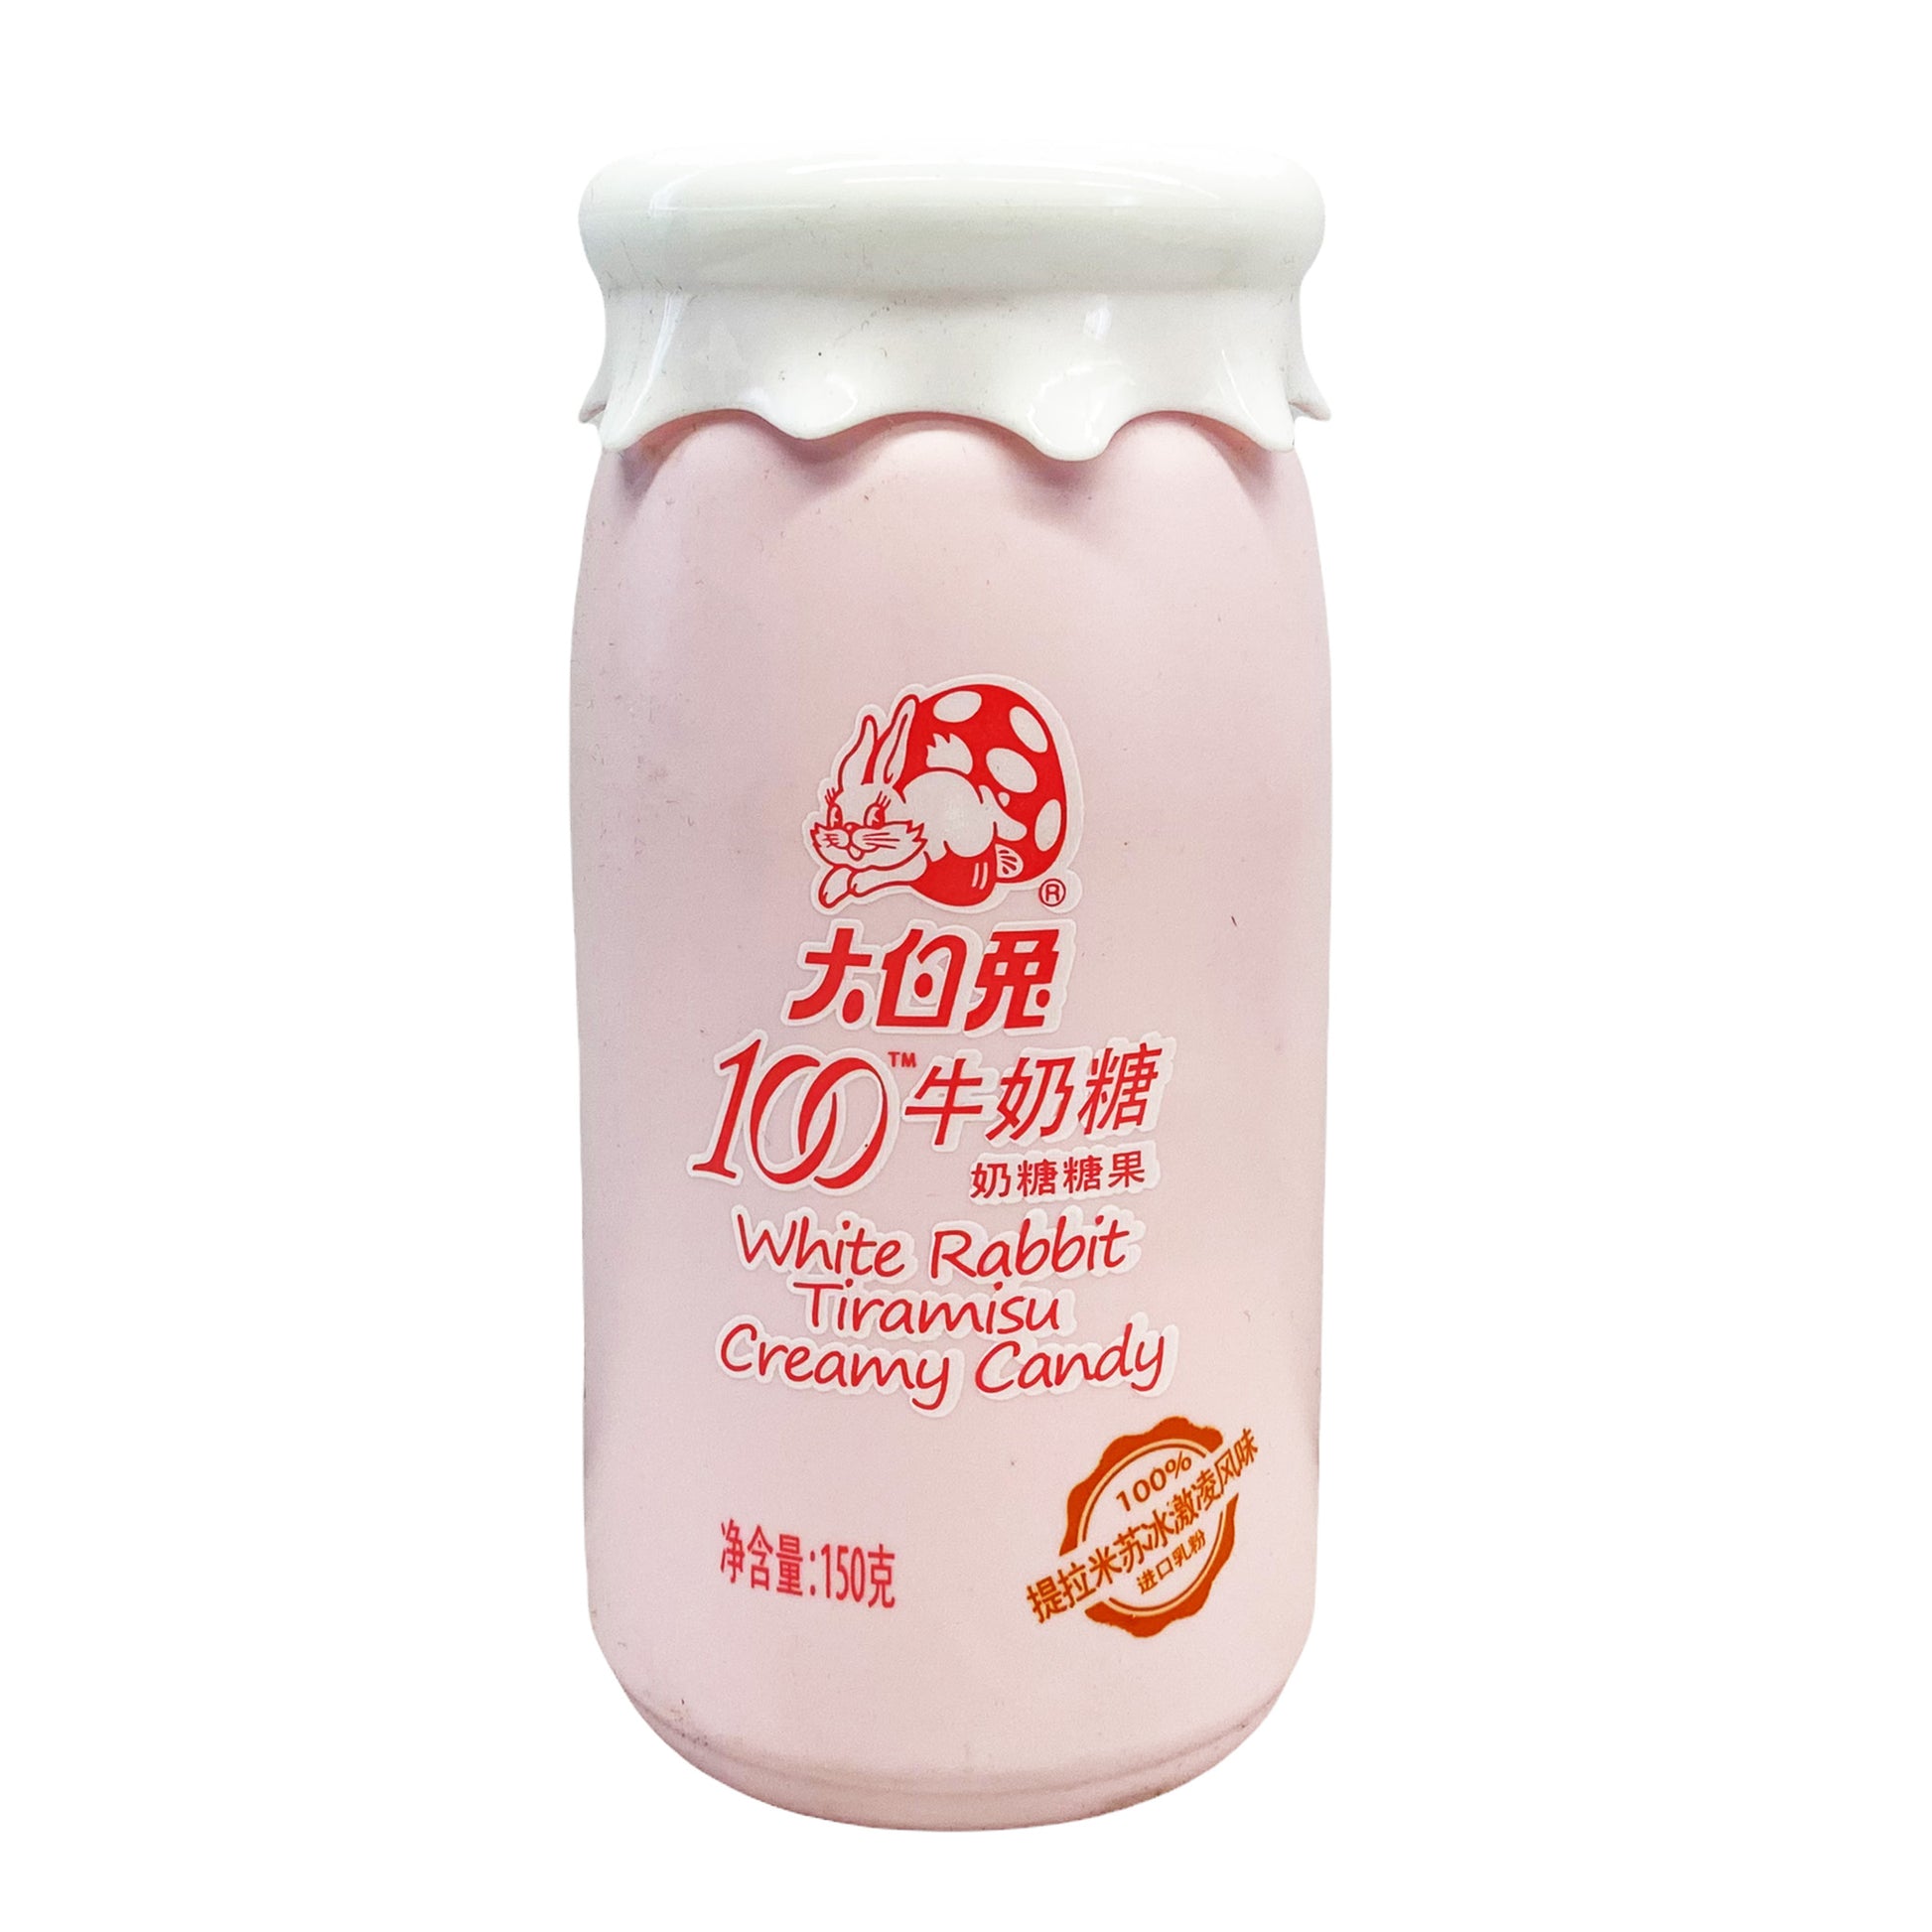 Front graphic image of White Rabbit Creamy Candy in Jar - Tiramisu Ice Cream Flavor 5.3oz (150g) - 大白兔 奶糖罐 - 提拉米苏冰激凌口味 5.3oz (150g)